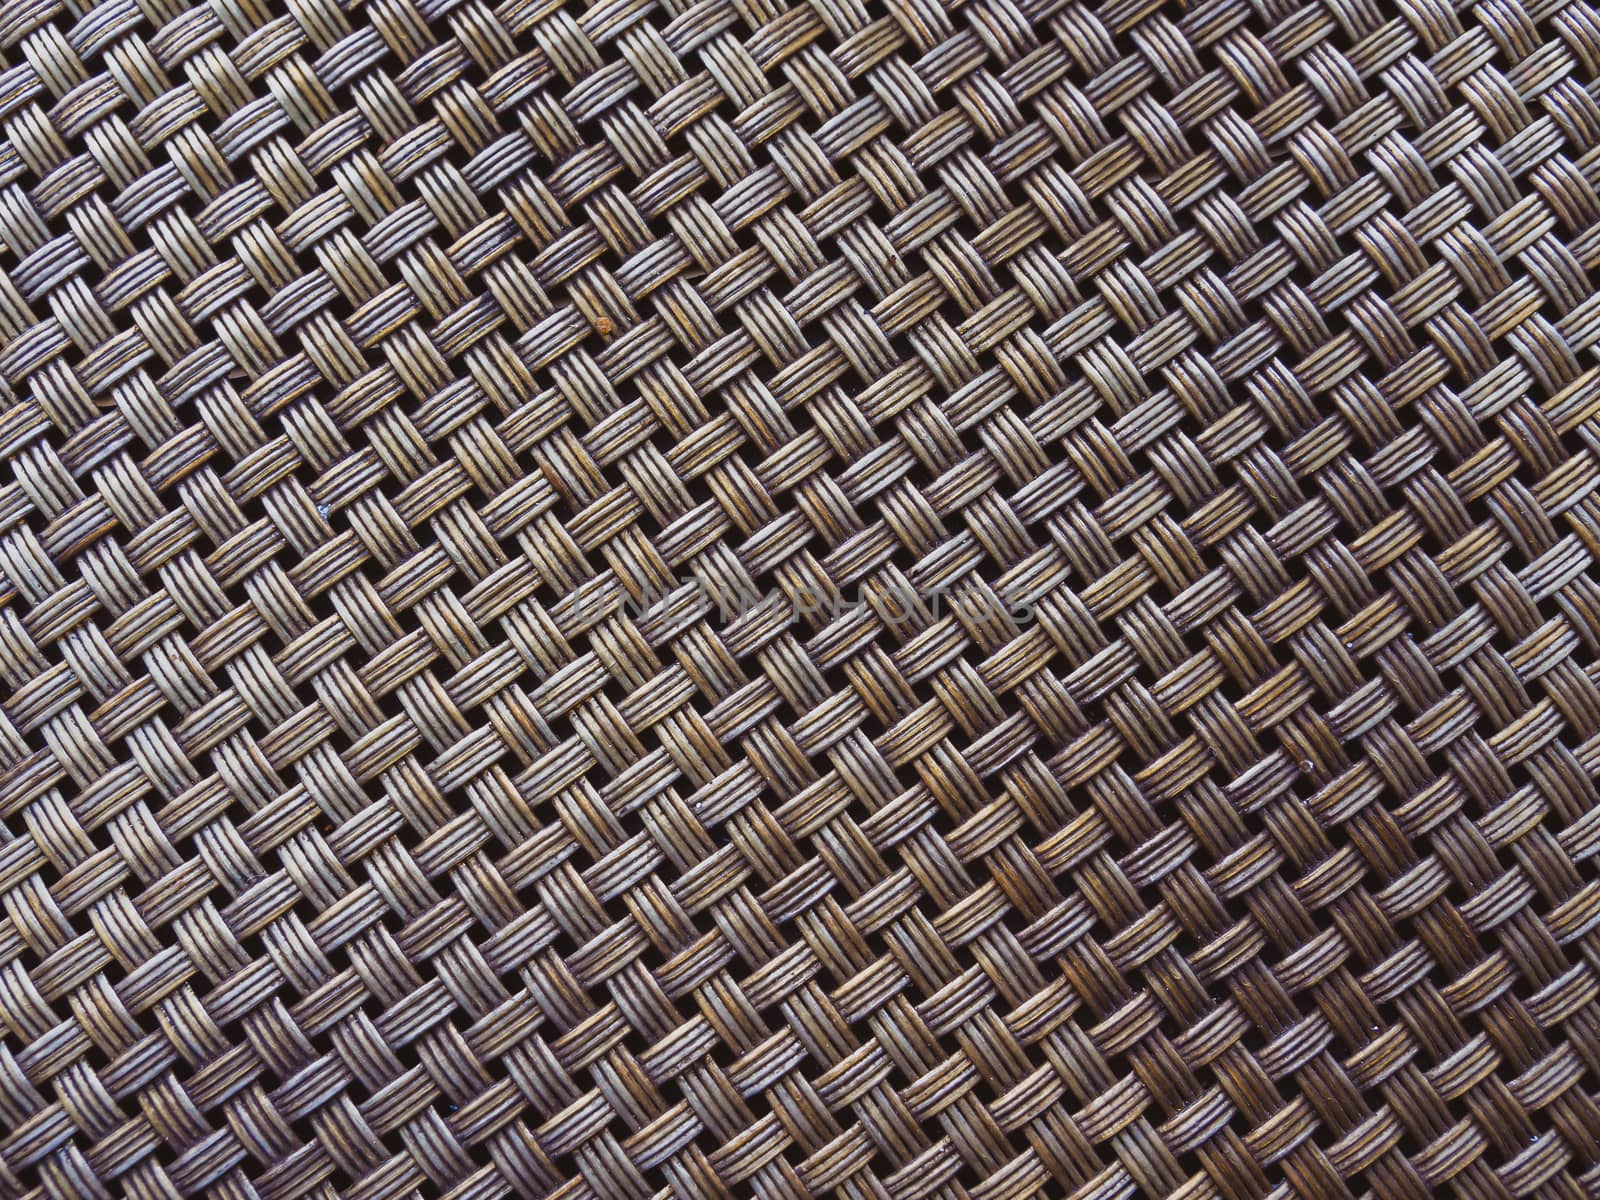 Basketry pattern texture background. Brown rattan pattern background.